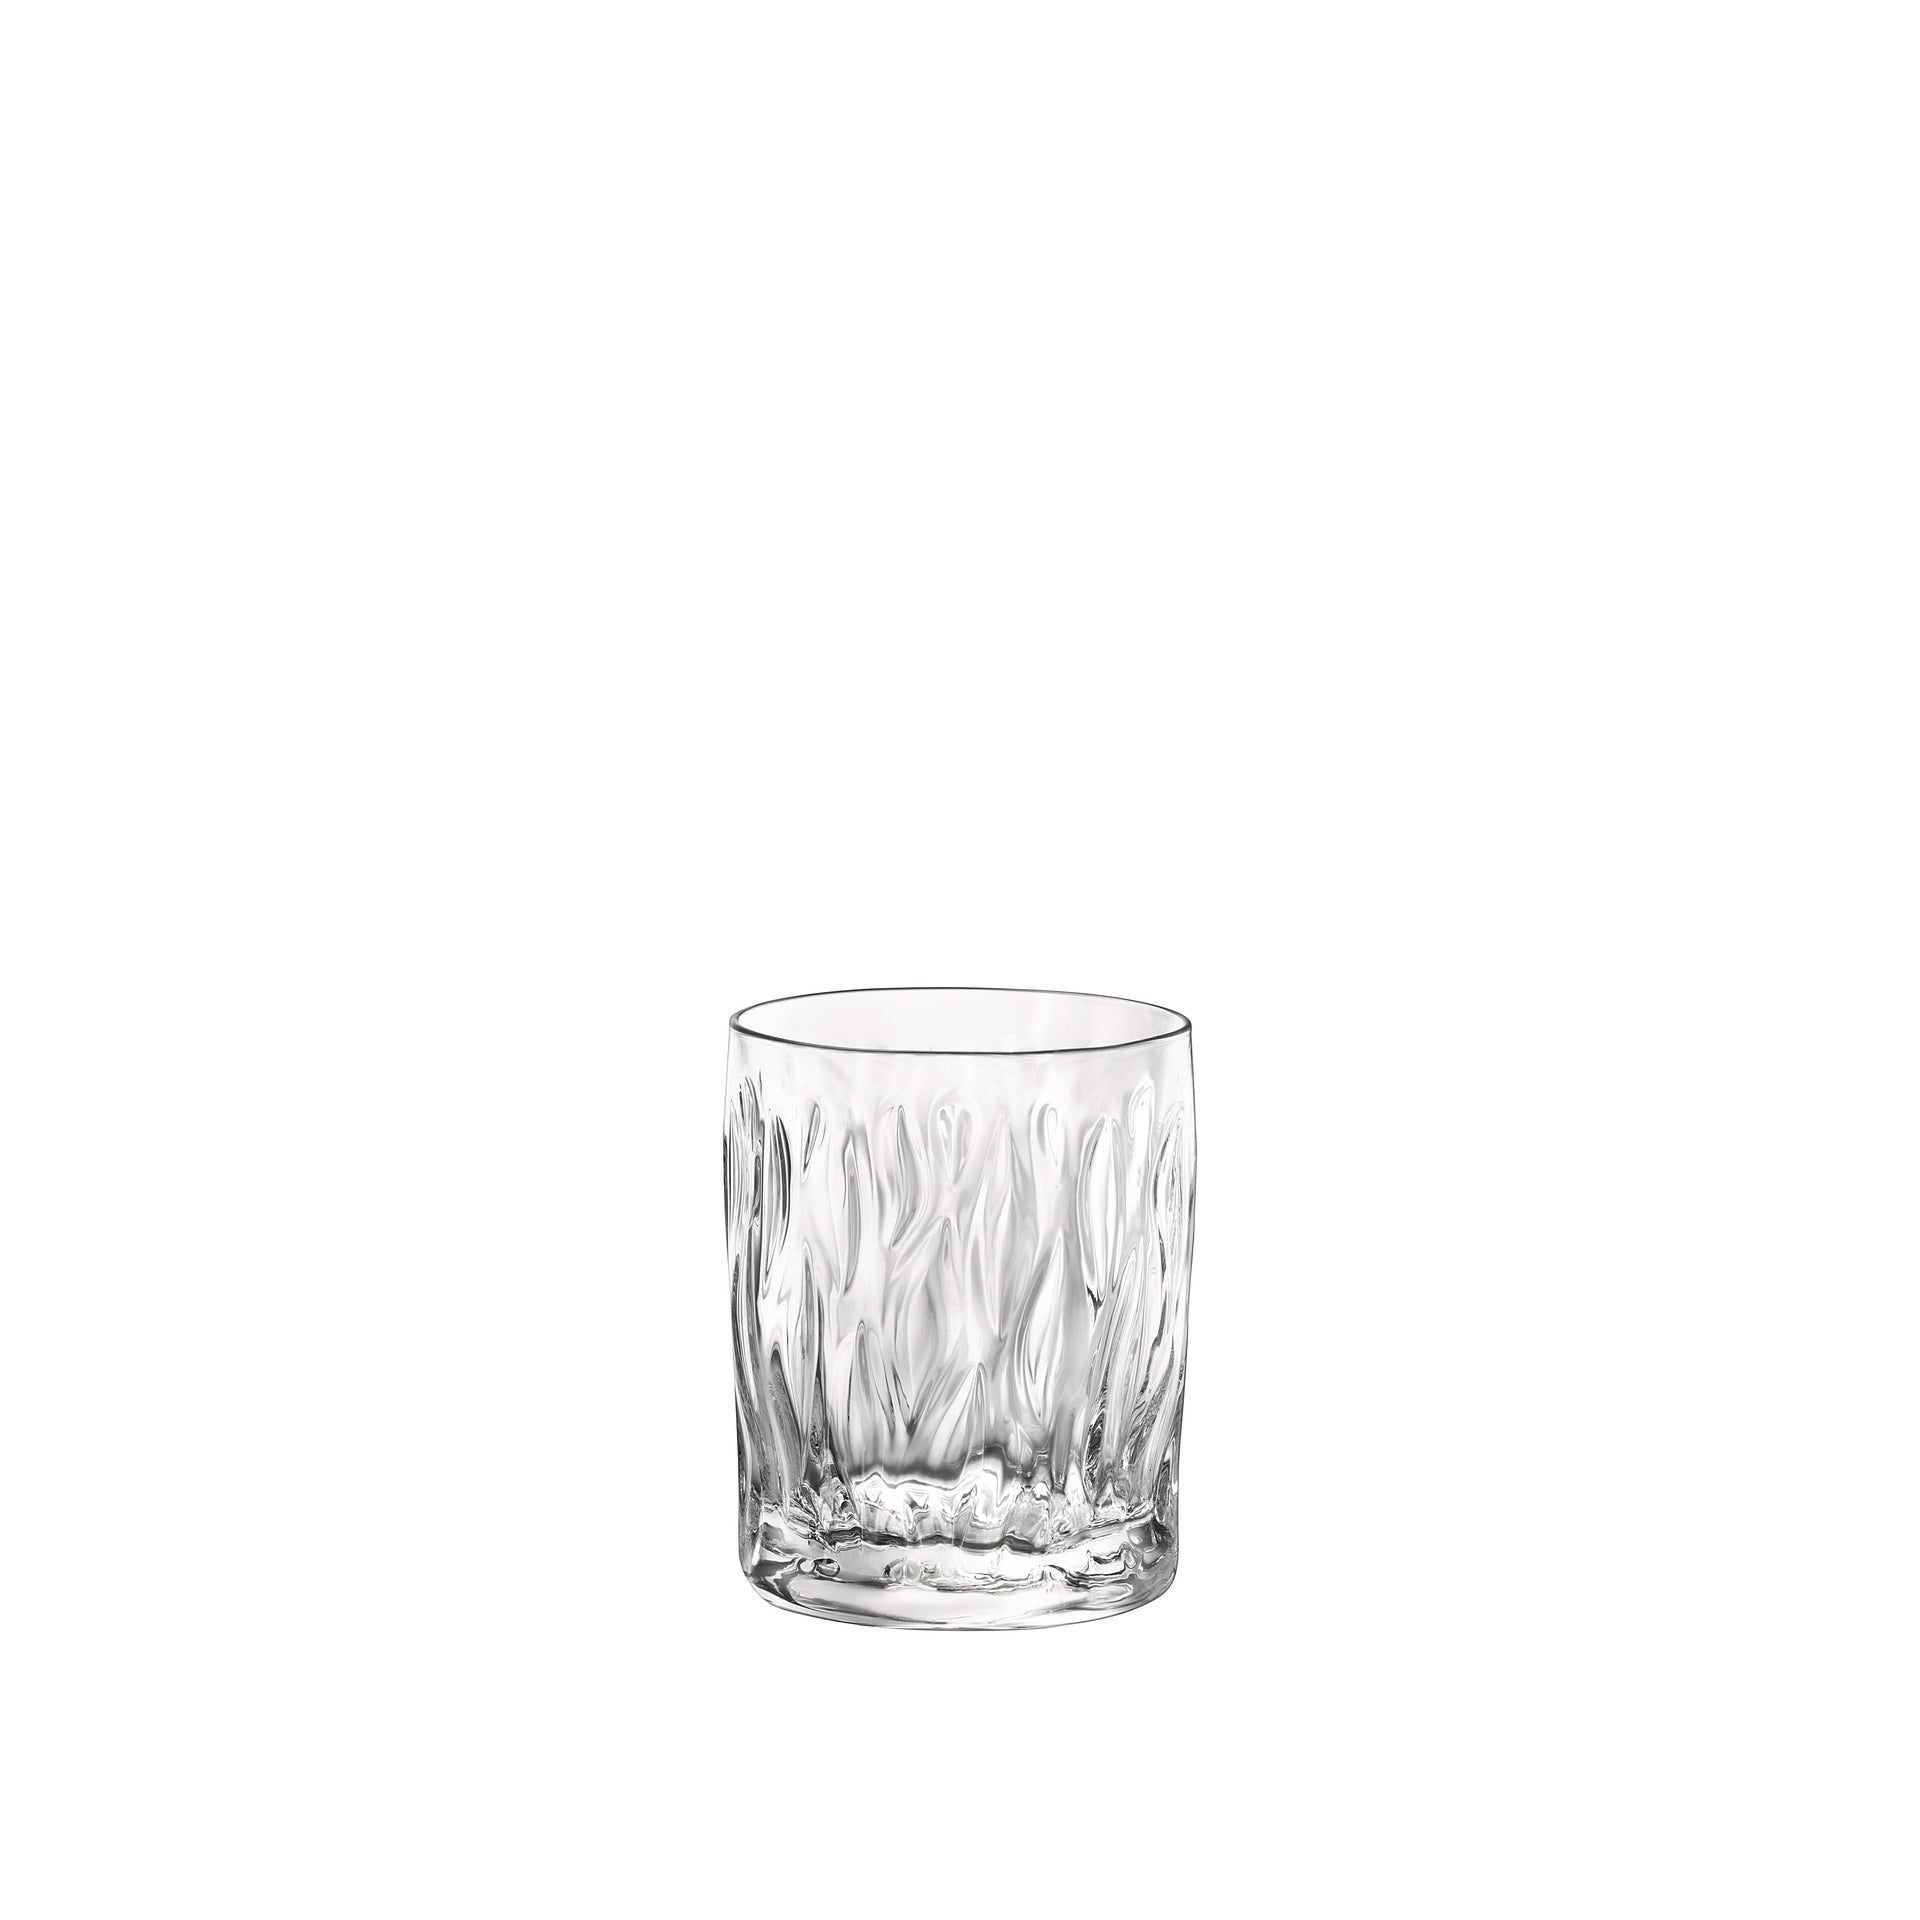 Wind 11.75 oz. DOF Drinking Glasses (Set of 6)